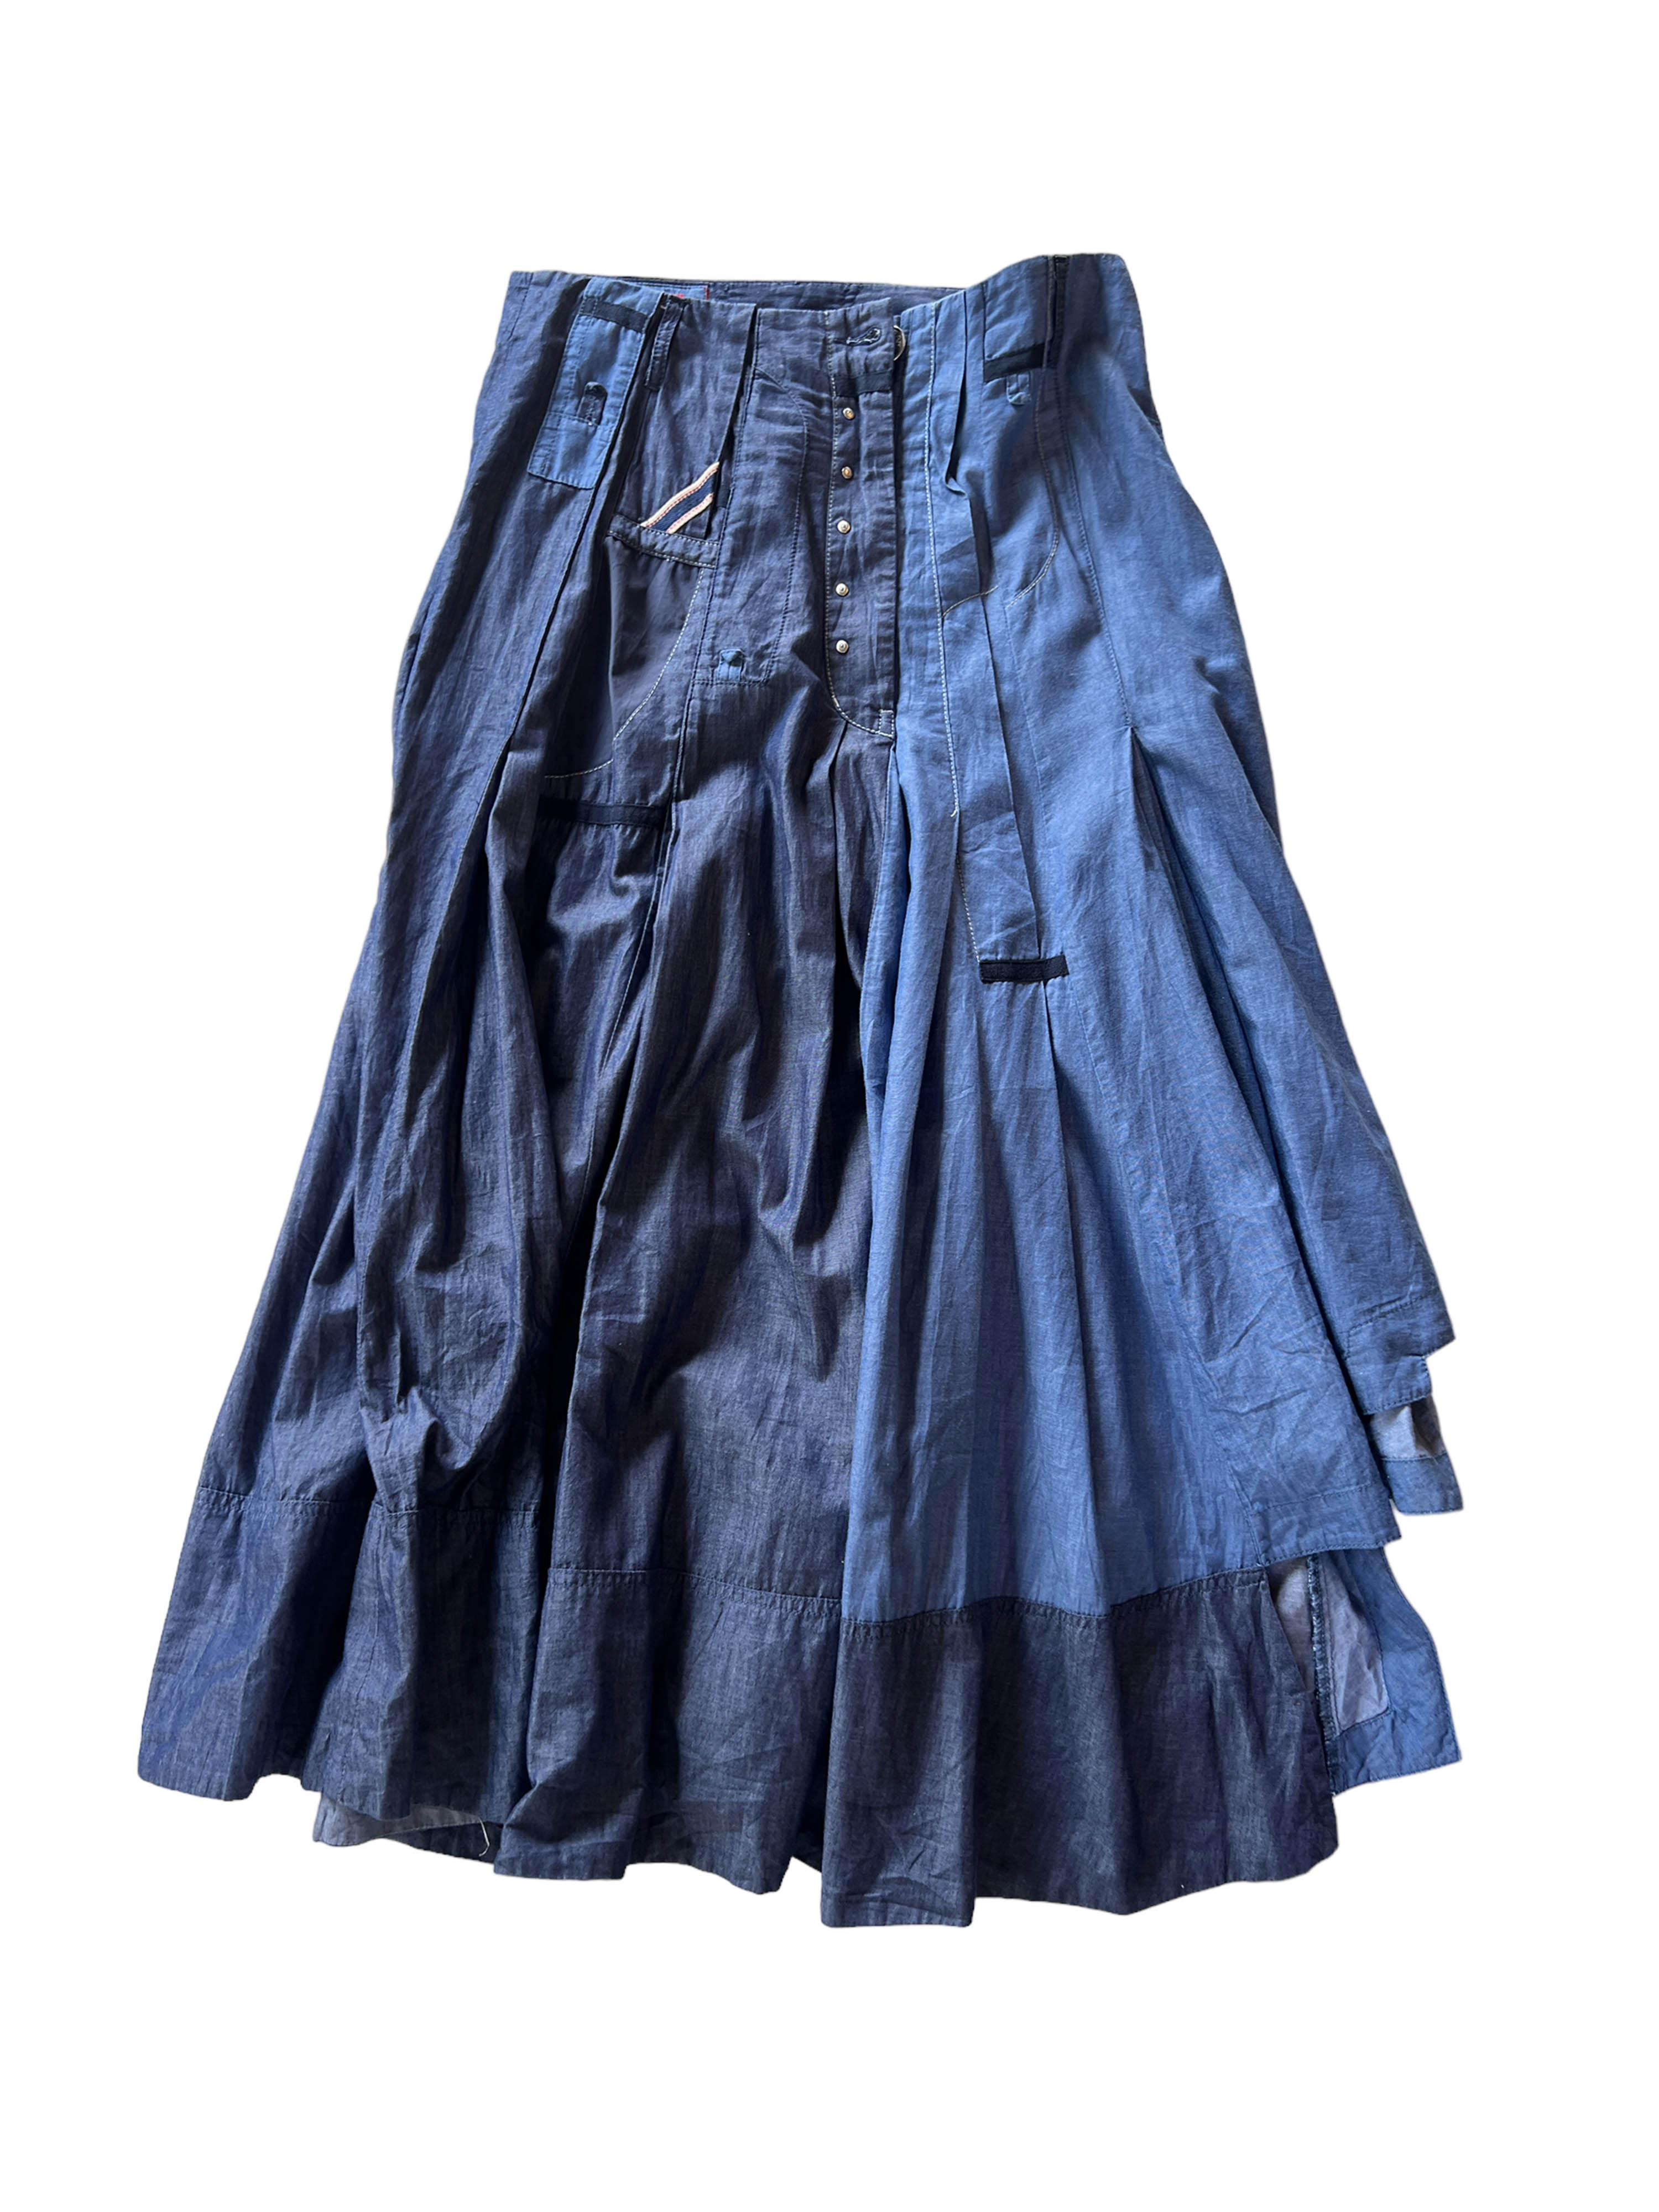 Marithe Francois Girbaud skirts